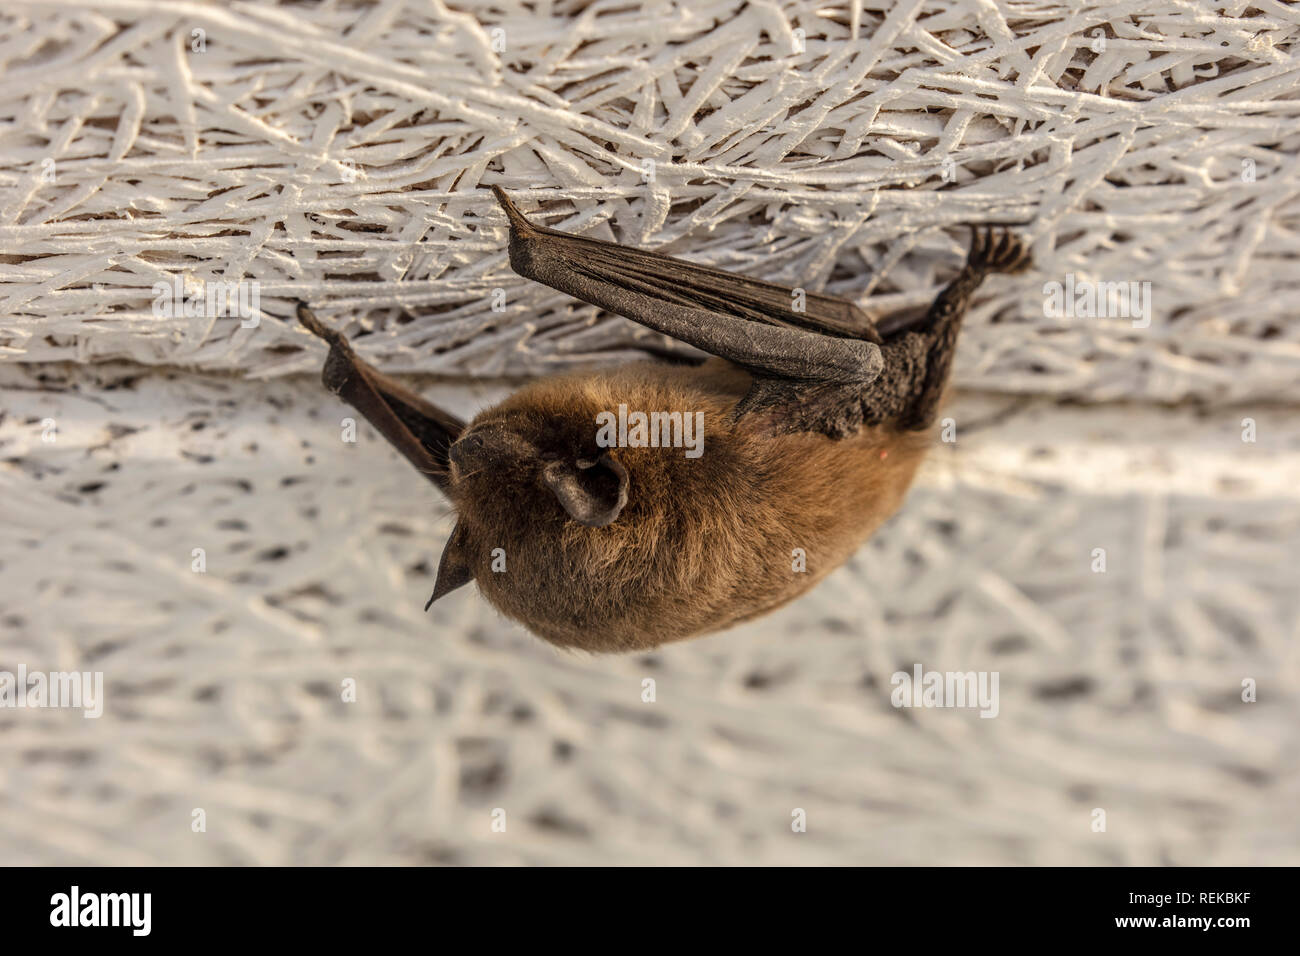 Los Países Bajos, 's-Graveland, el murciélago enano o pipistrelle común (Pipistrellus pipistrellus). Foto de stock